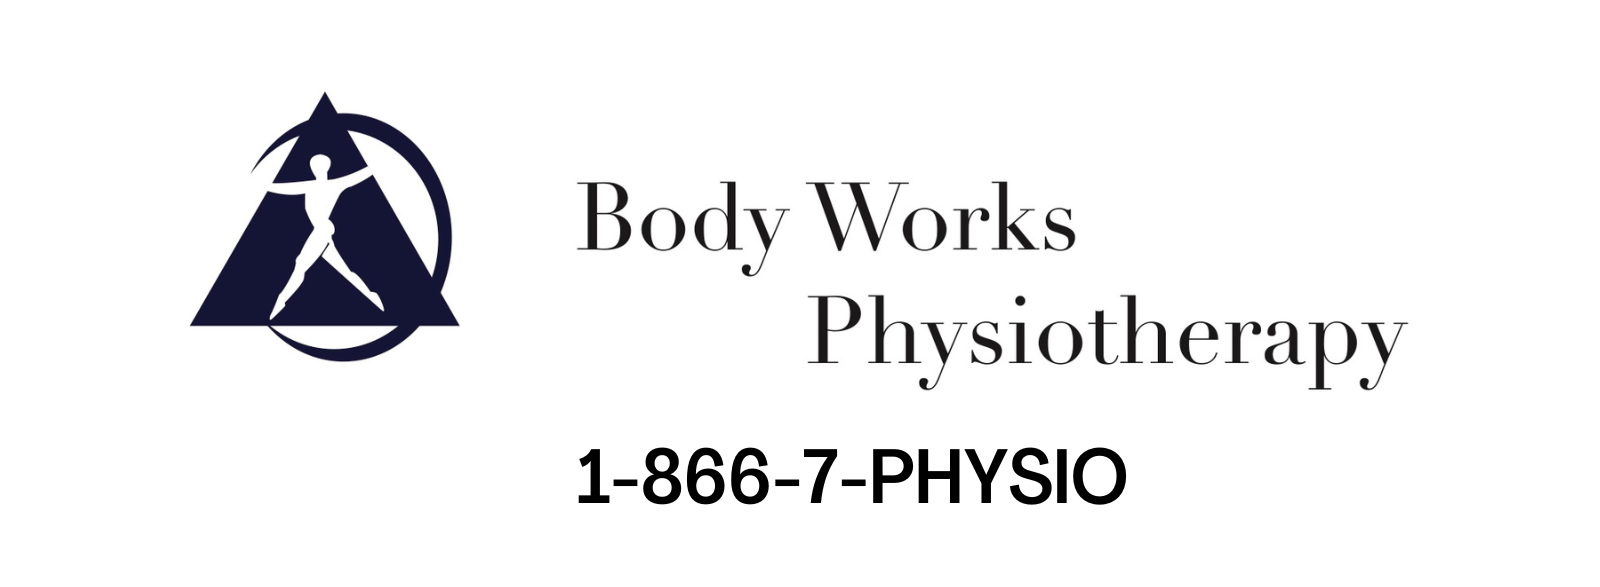 Body Works Physio